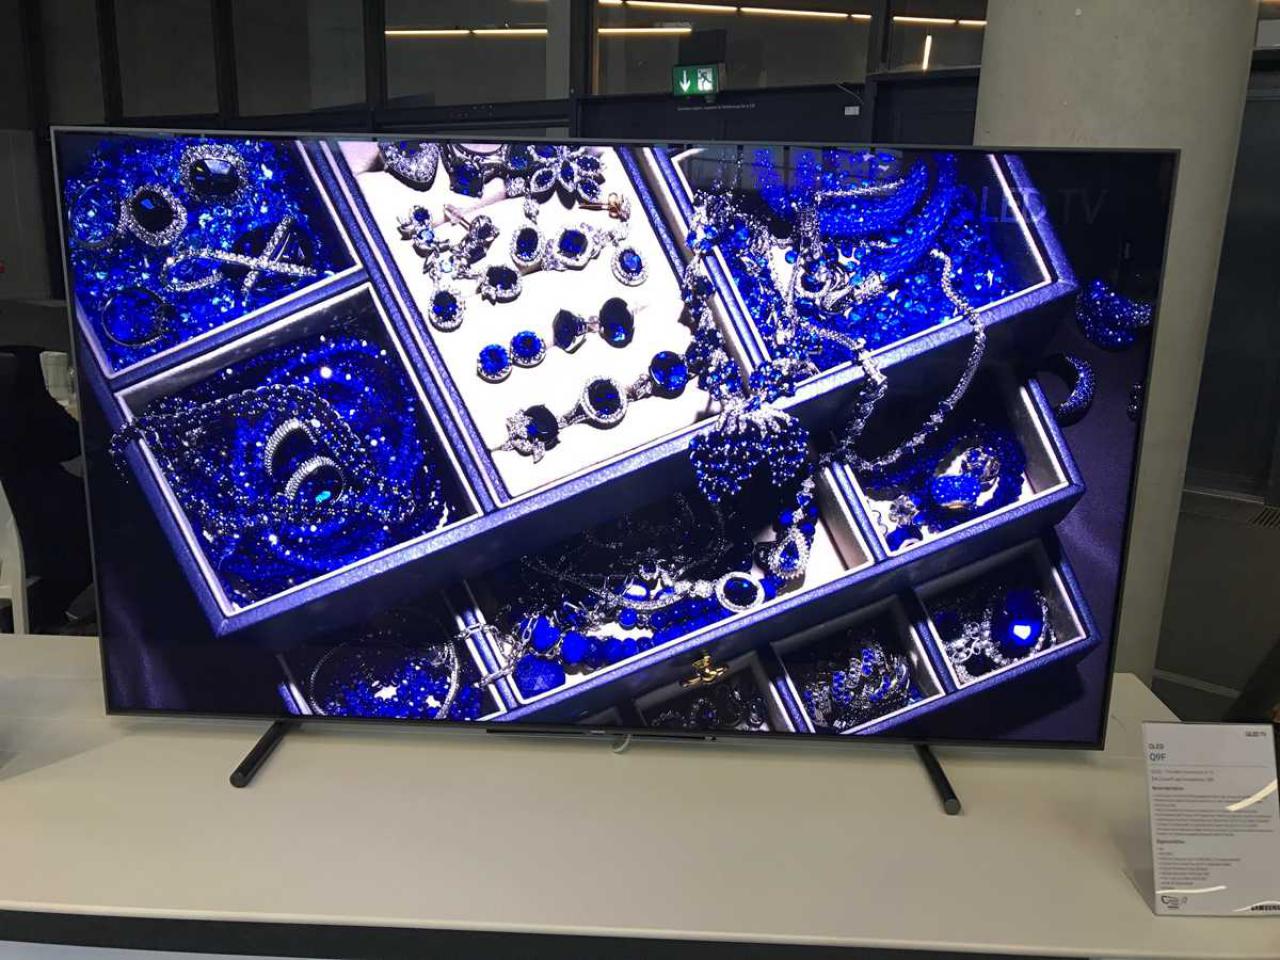 Samsung Spitzenmodell 2017 Q9F QLED TV